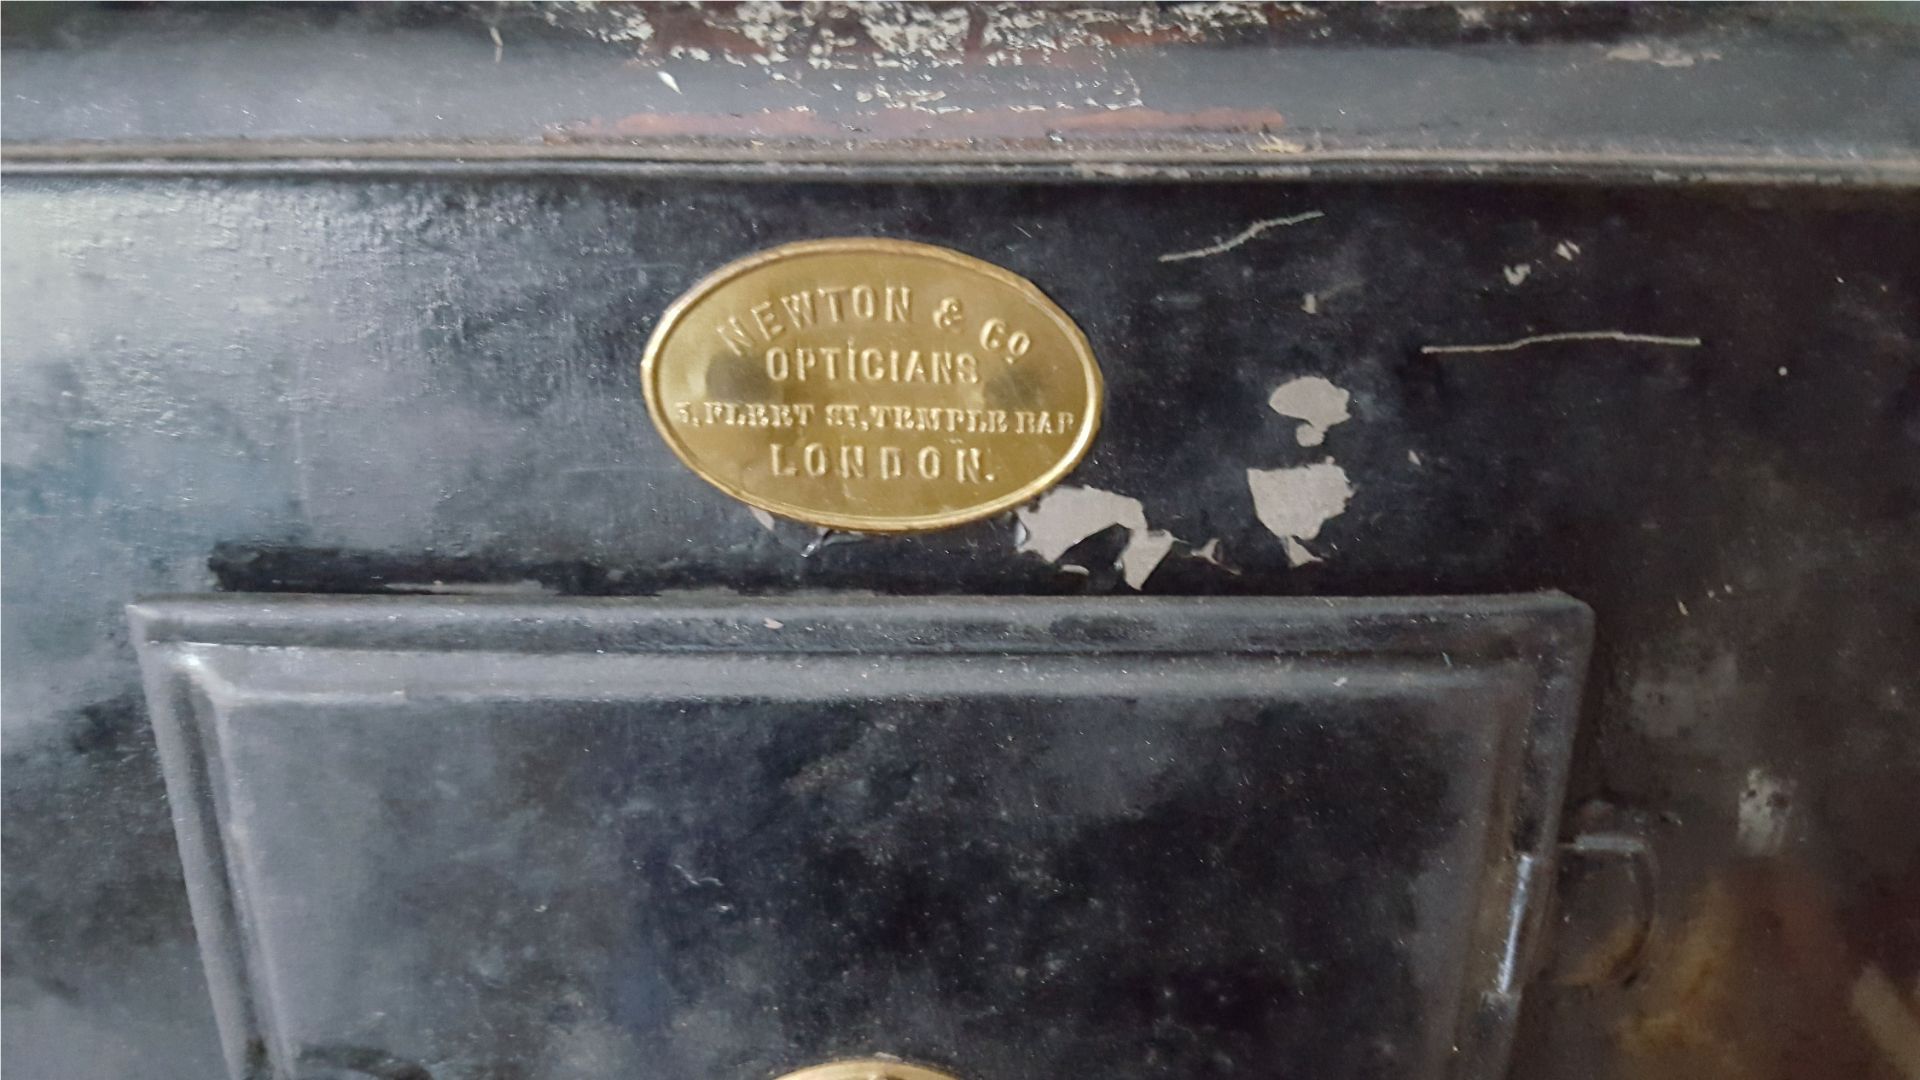 Antique Vintage Edwardian Magic Lantern Newton & Co. London with original storage box - Image 2 of 3